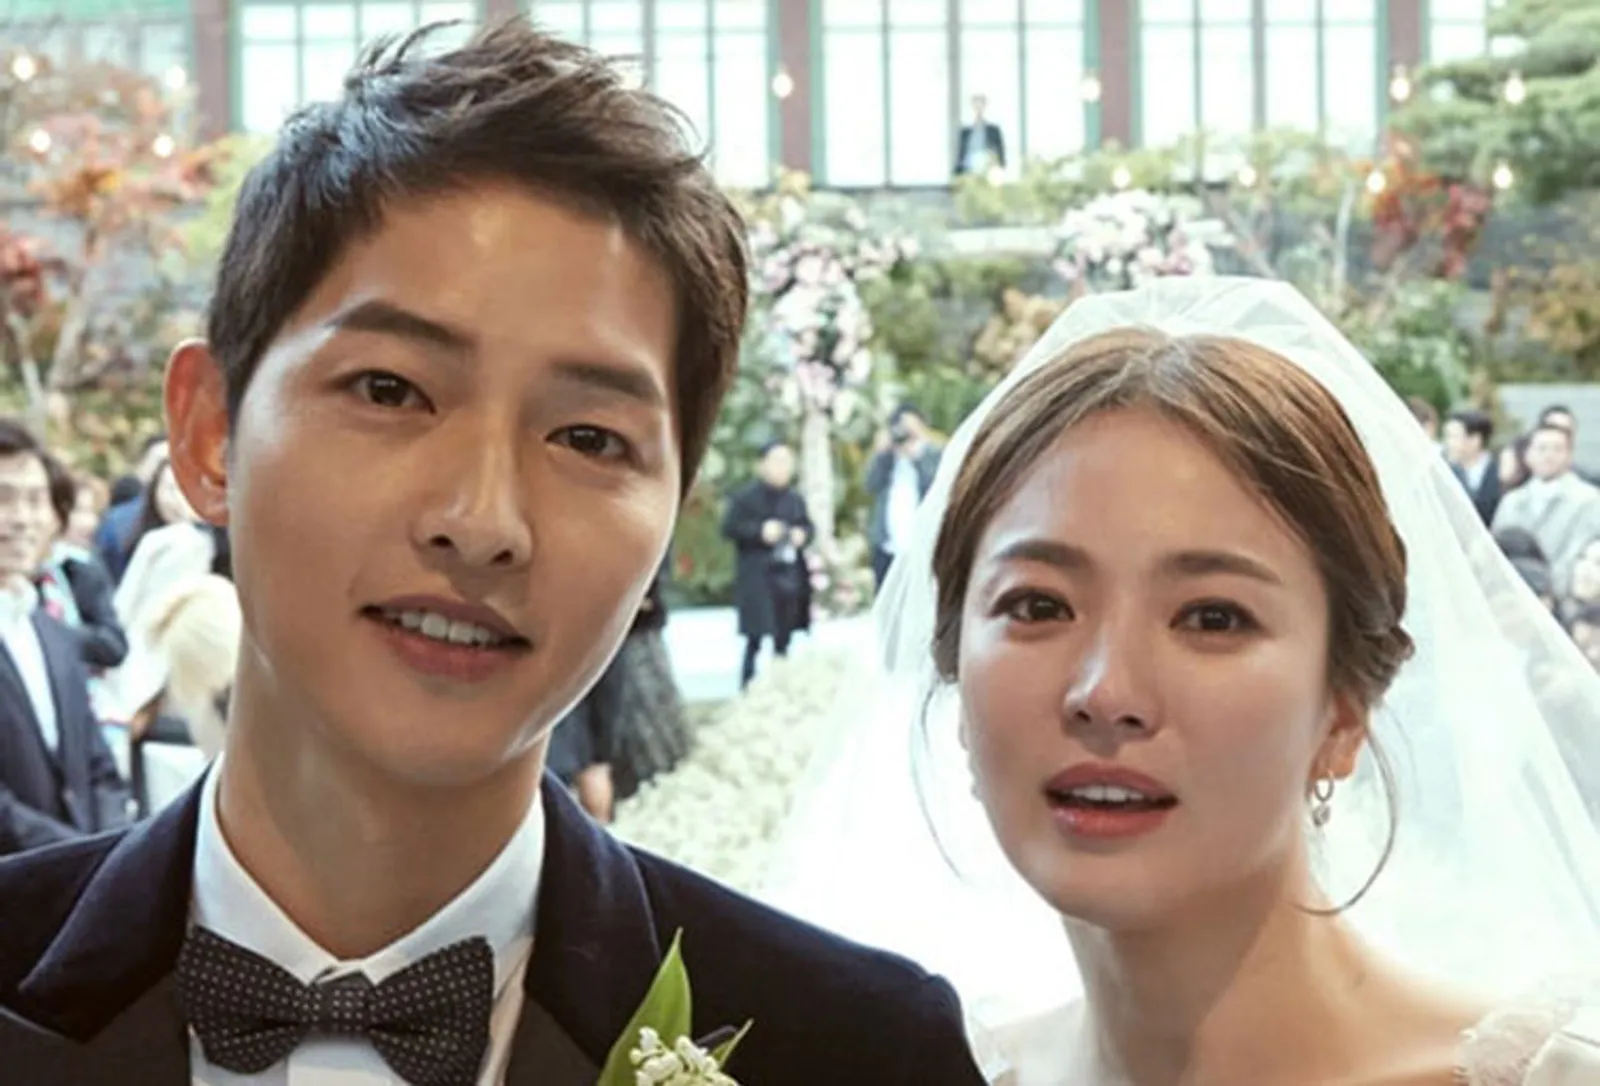 Ups! Ini yang Buat Netizen Marah di Pernikahan Song Joong Ki - Song Hye Kyo